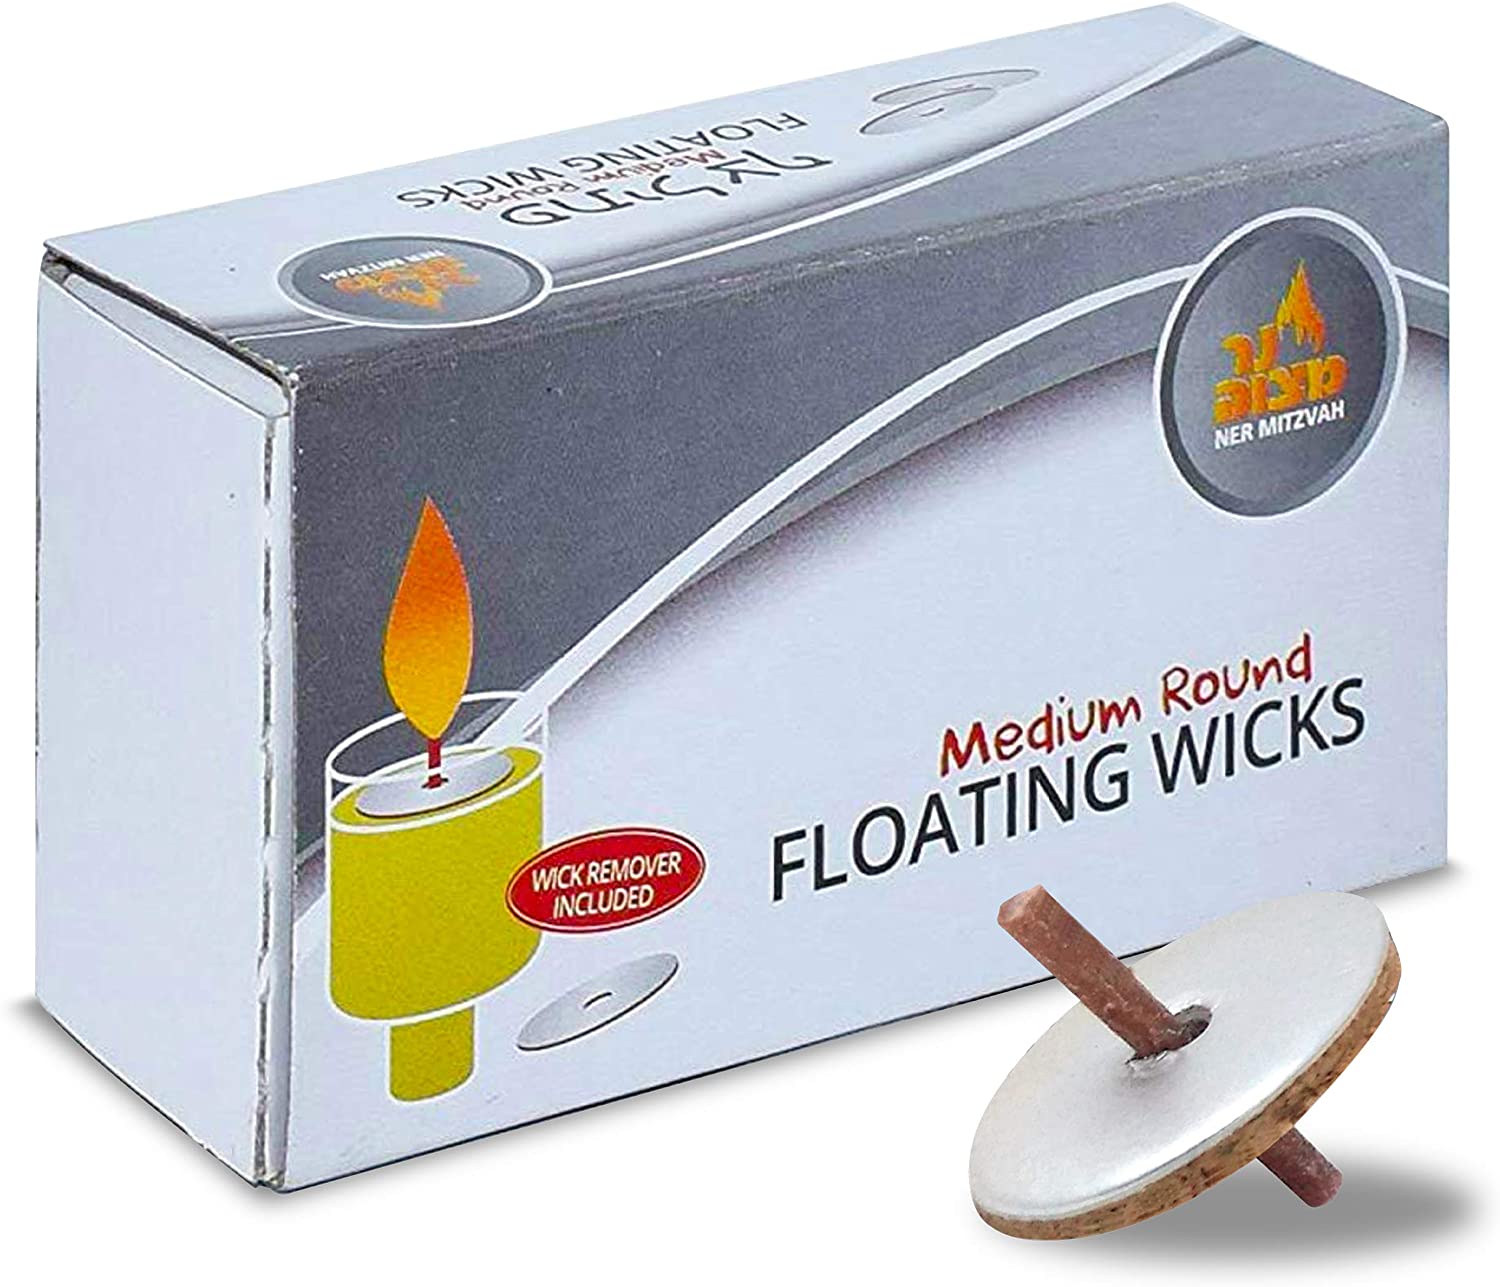 Medium Round Floating Wicks (5216370983047)